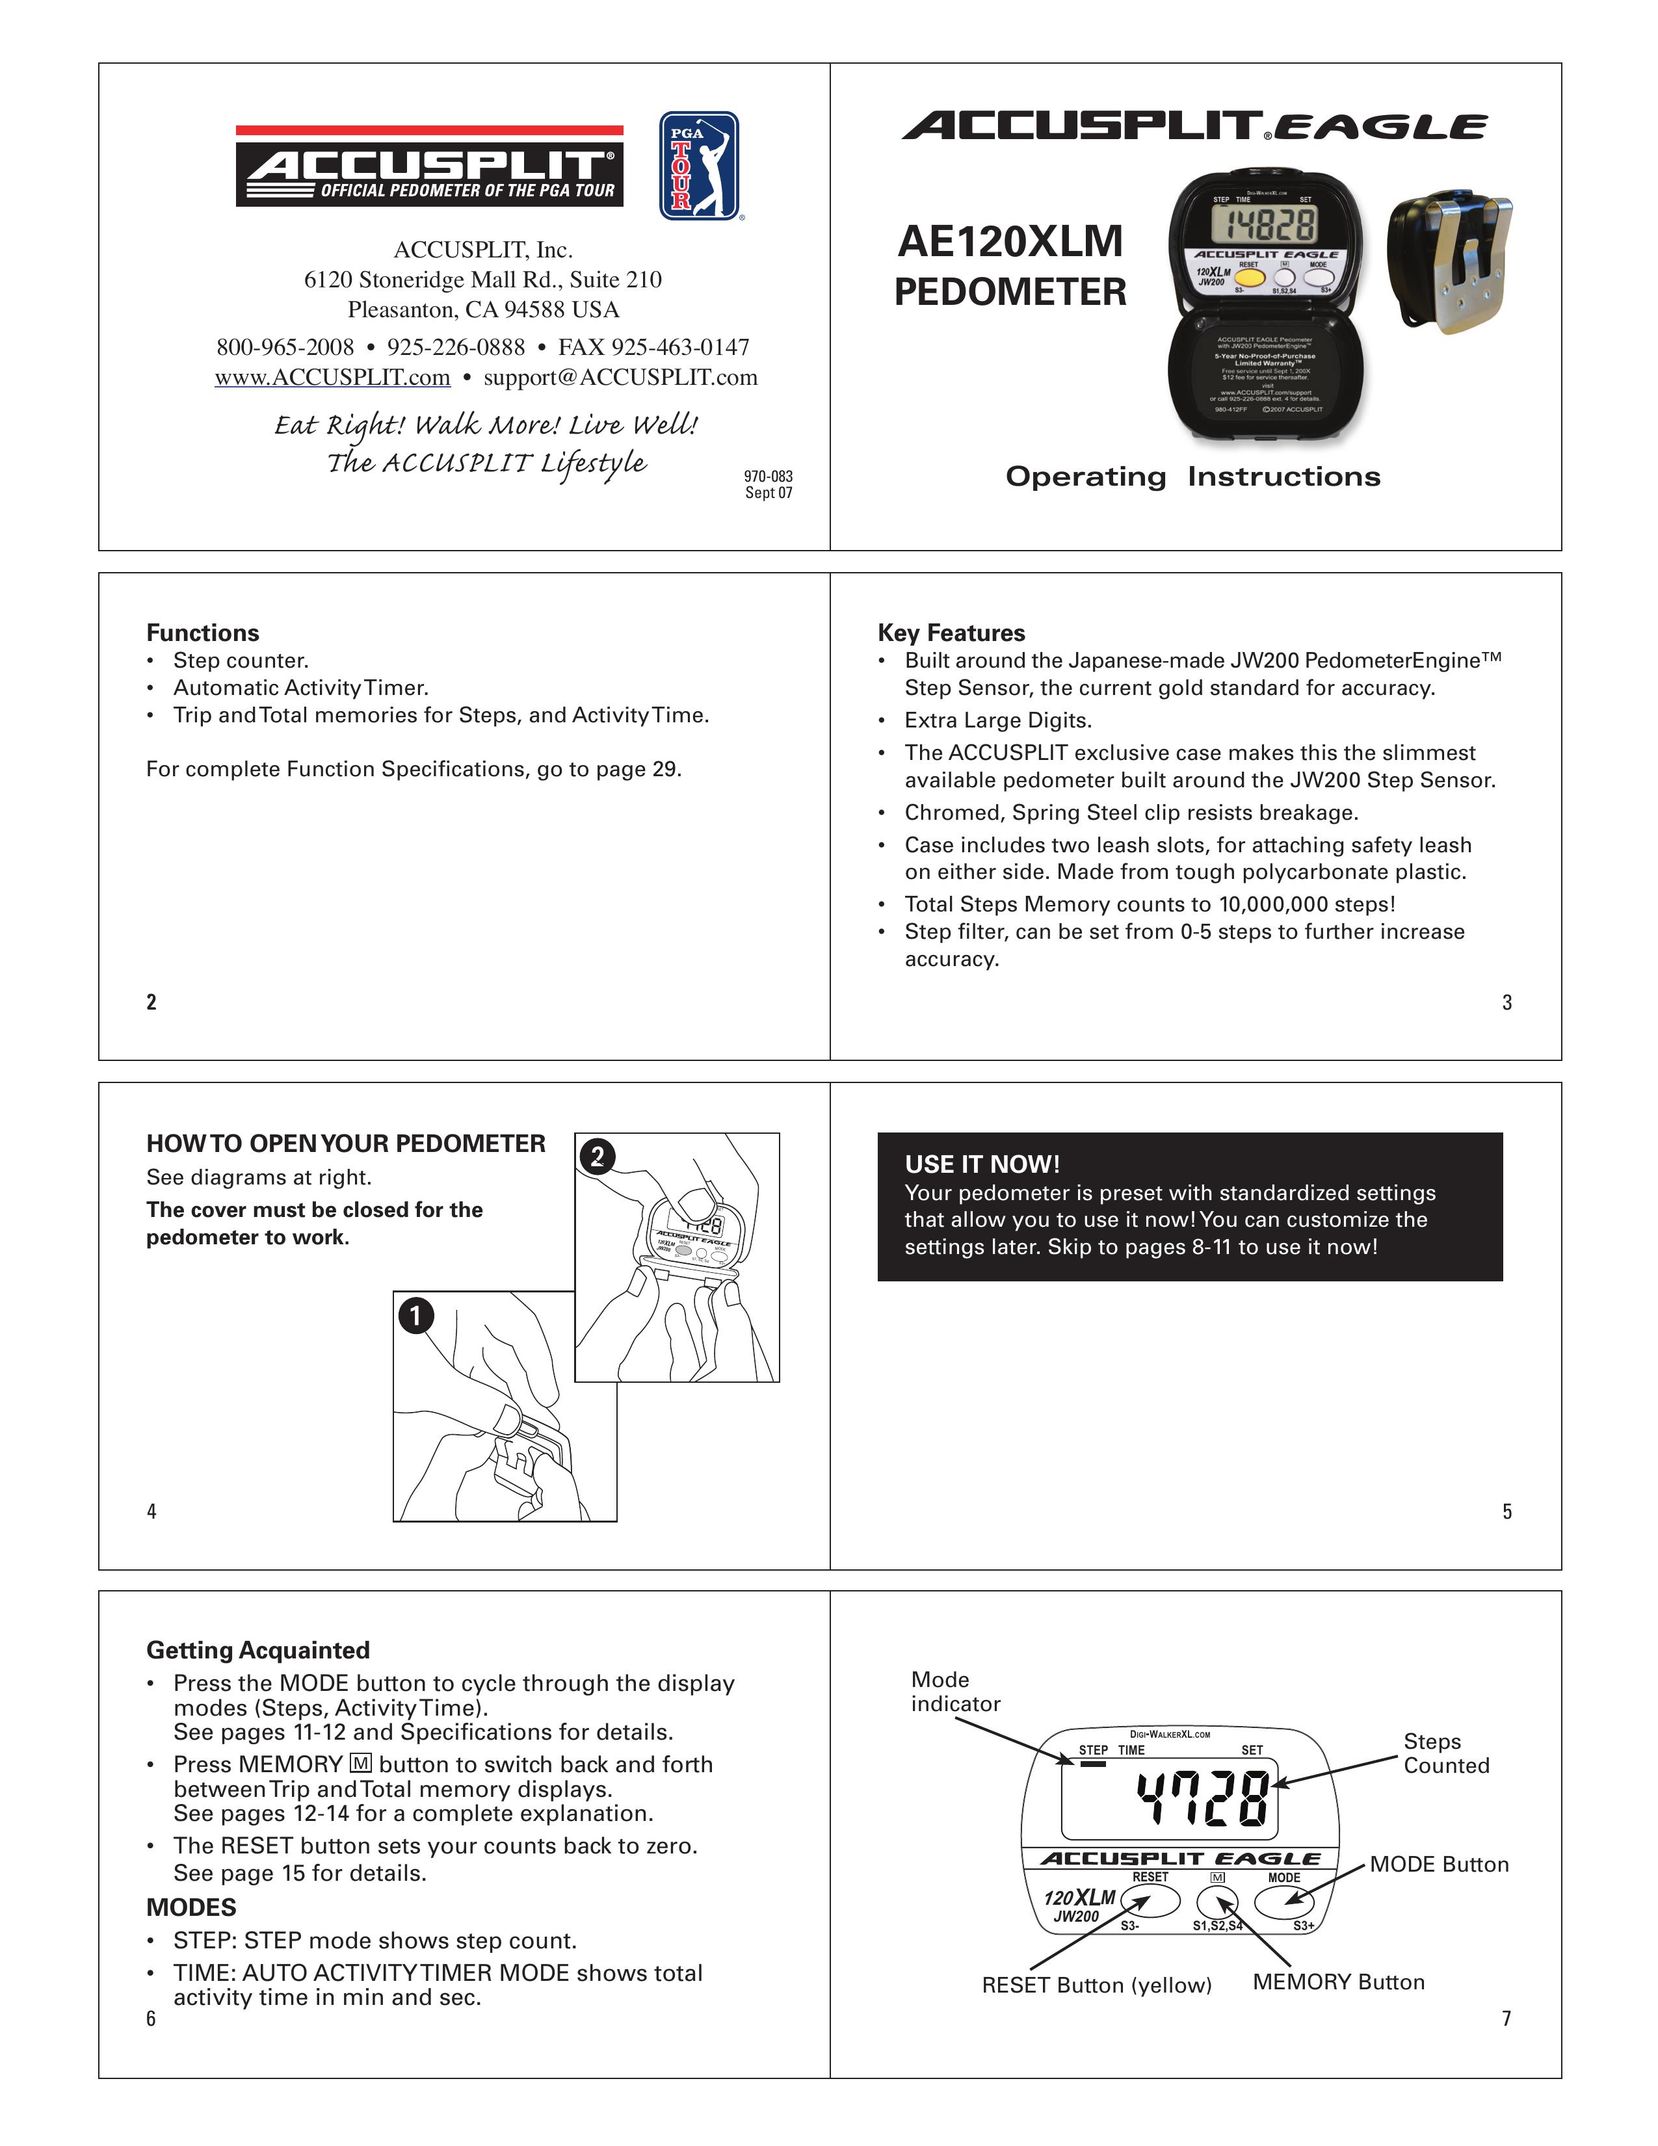 Accusplit AE120XLM Fitness Electronics User Manual